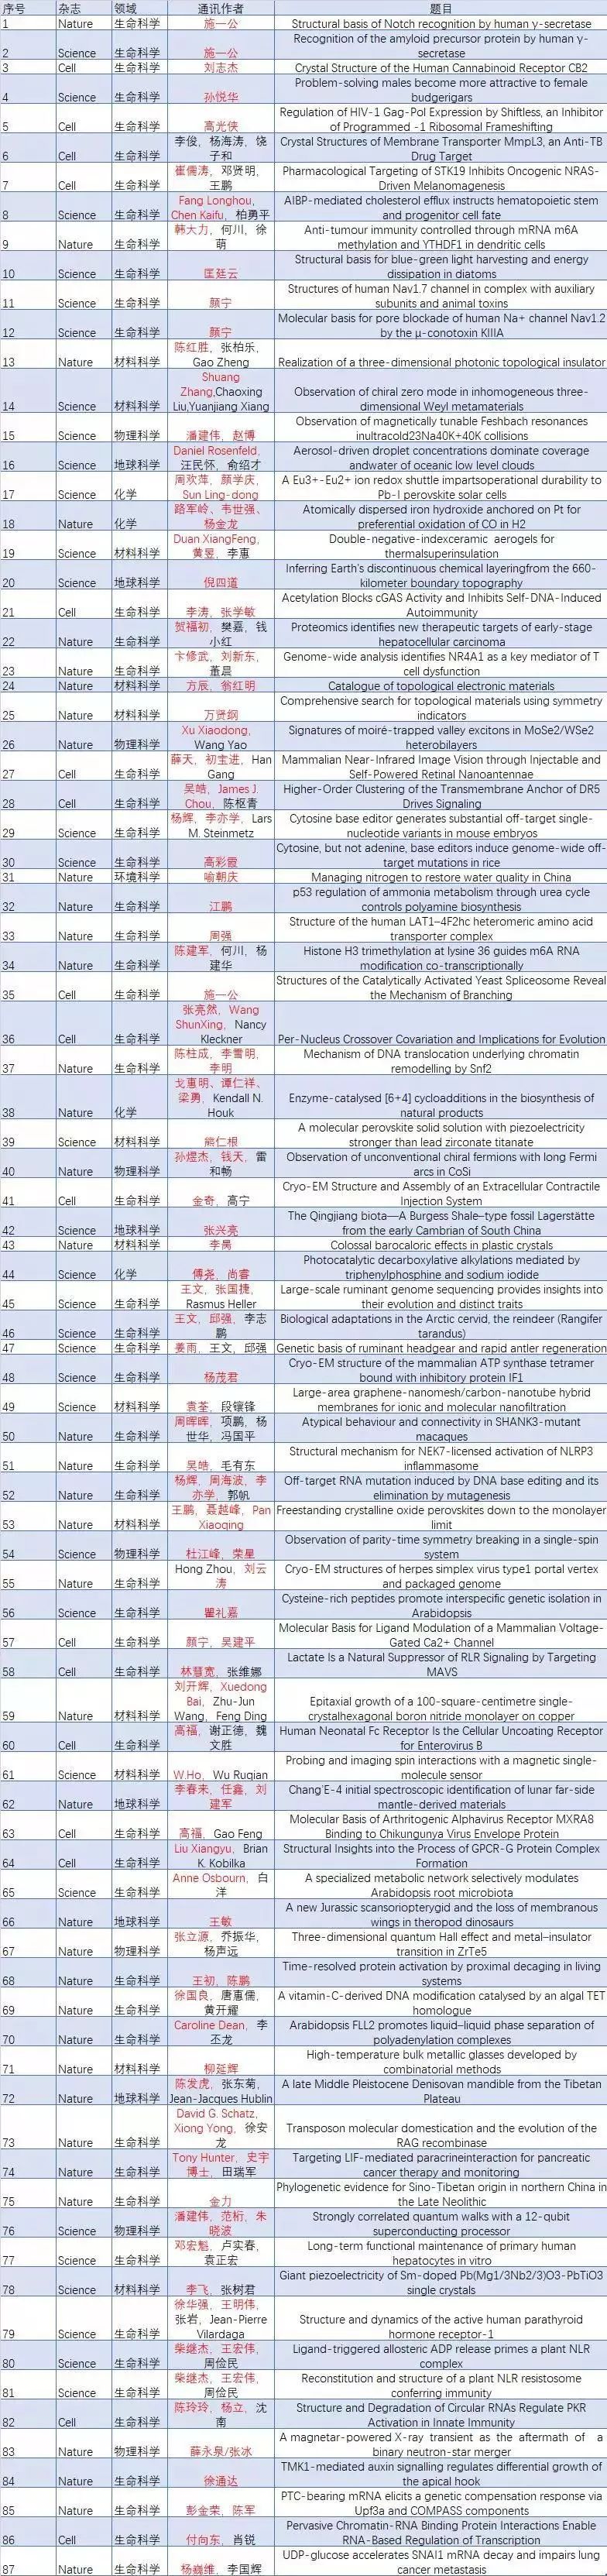 2019年上半年, 中国学者在Cell，Nature及Science发表87篇文章